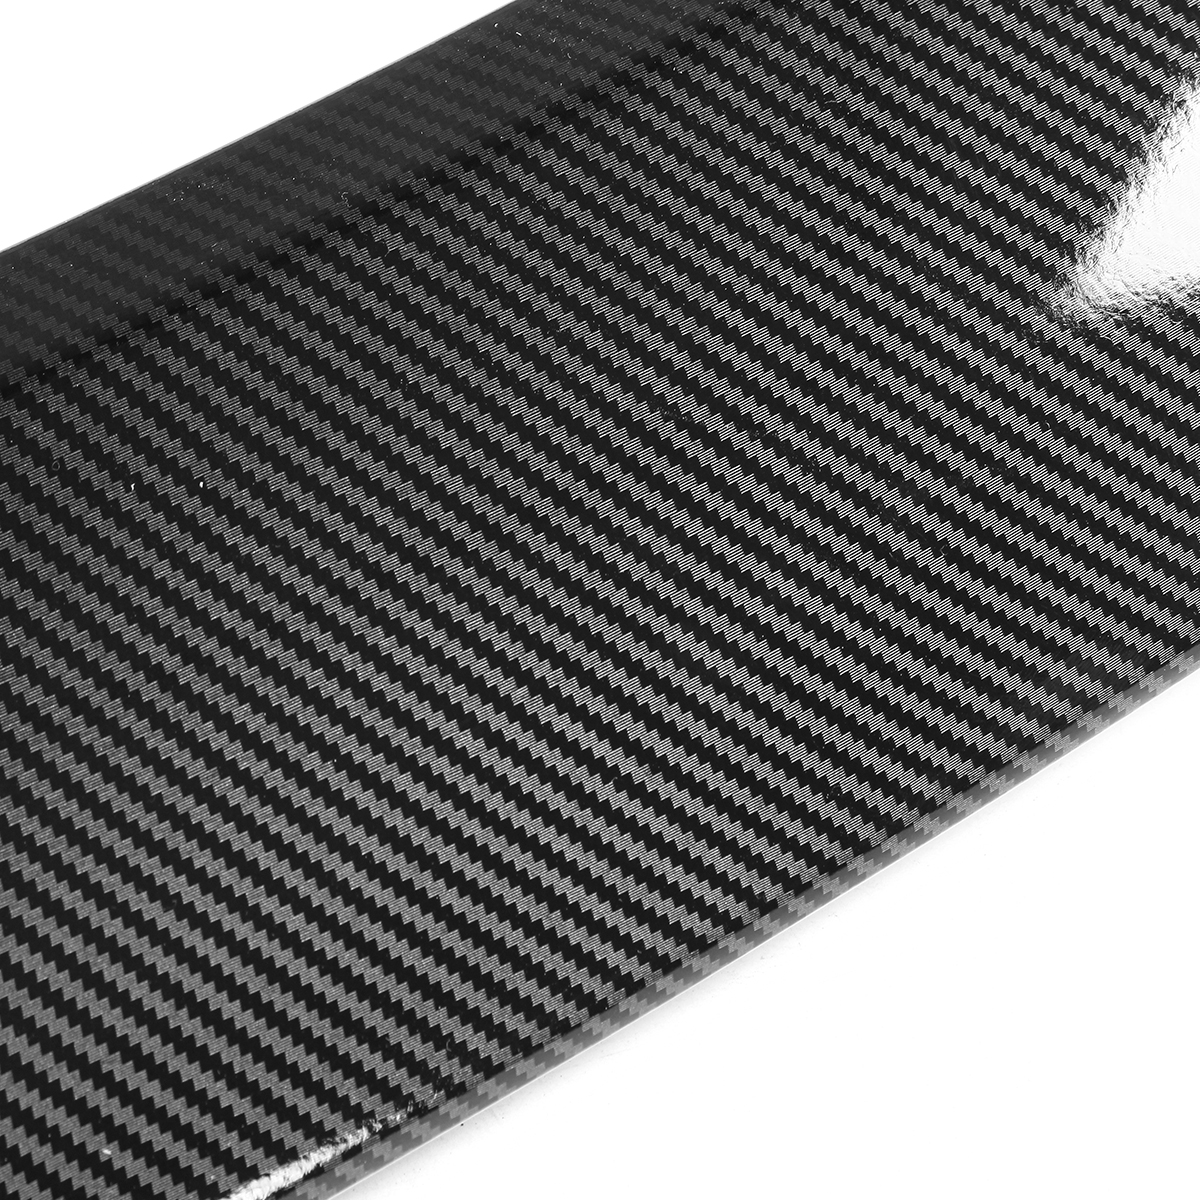 Carbon Fiber Look Rear Trunk Spoiler Wing Lip for DODGE Charger SRT 2015-2019